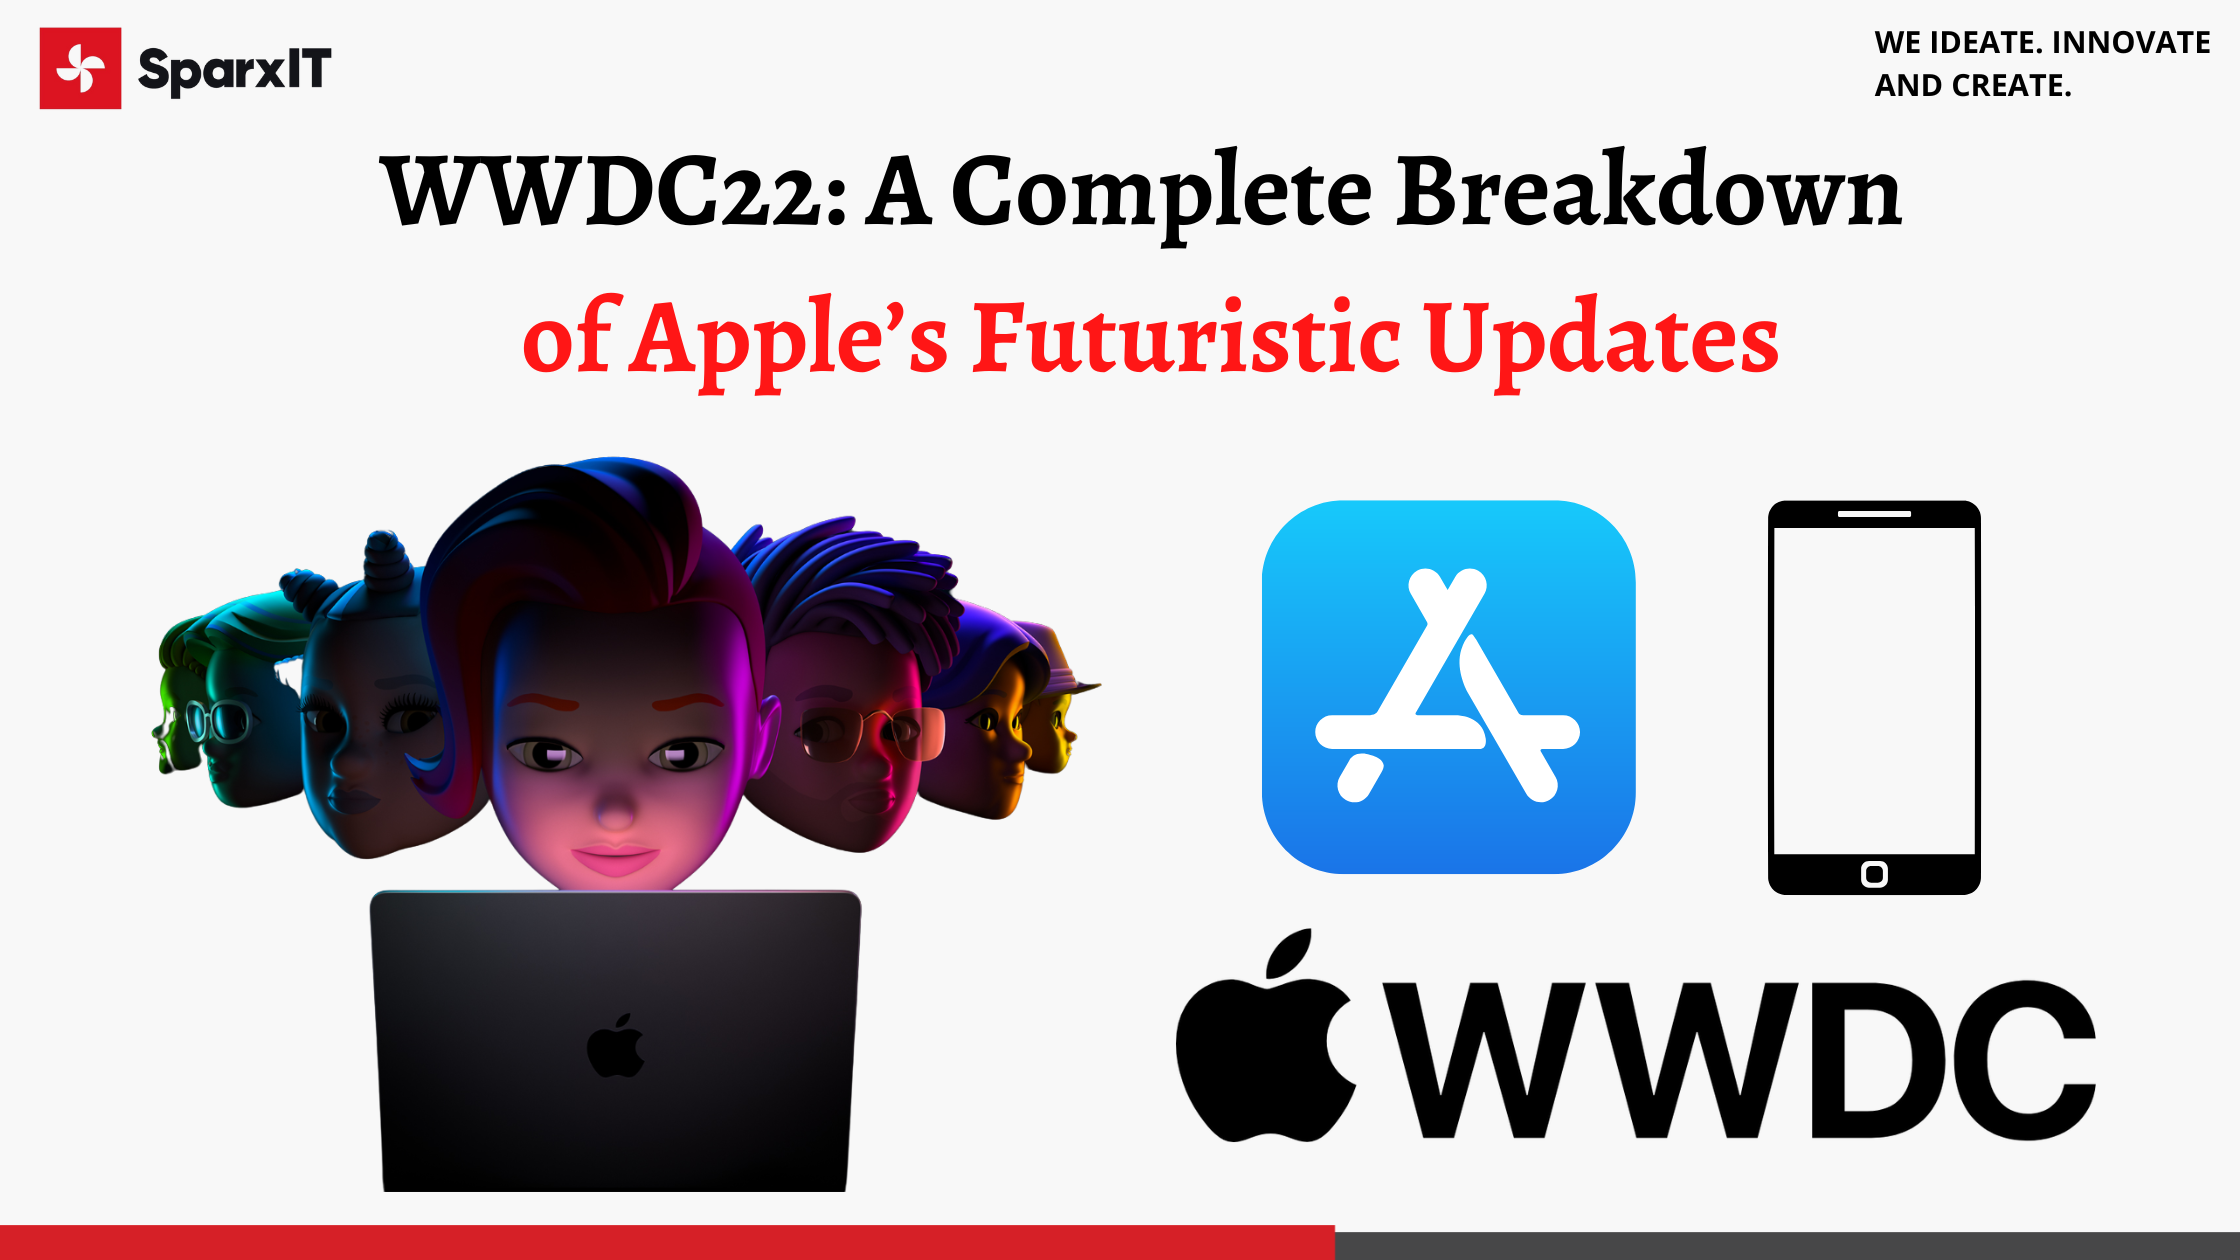 WWDC22: A Complete Breakdown of Apple’s Futuristic Updates